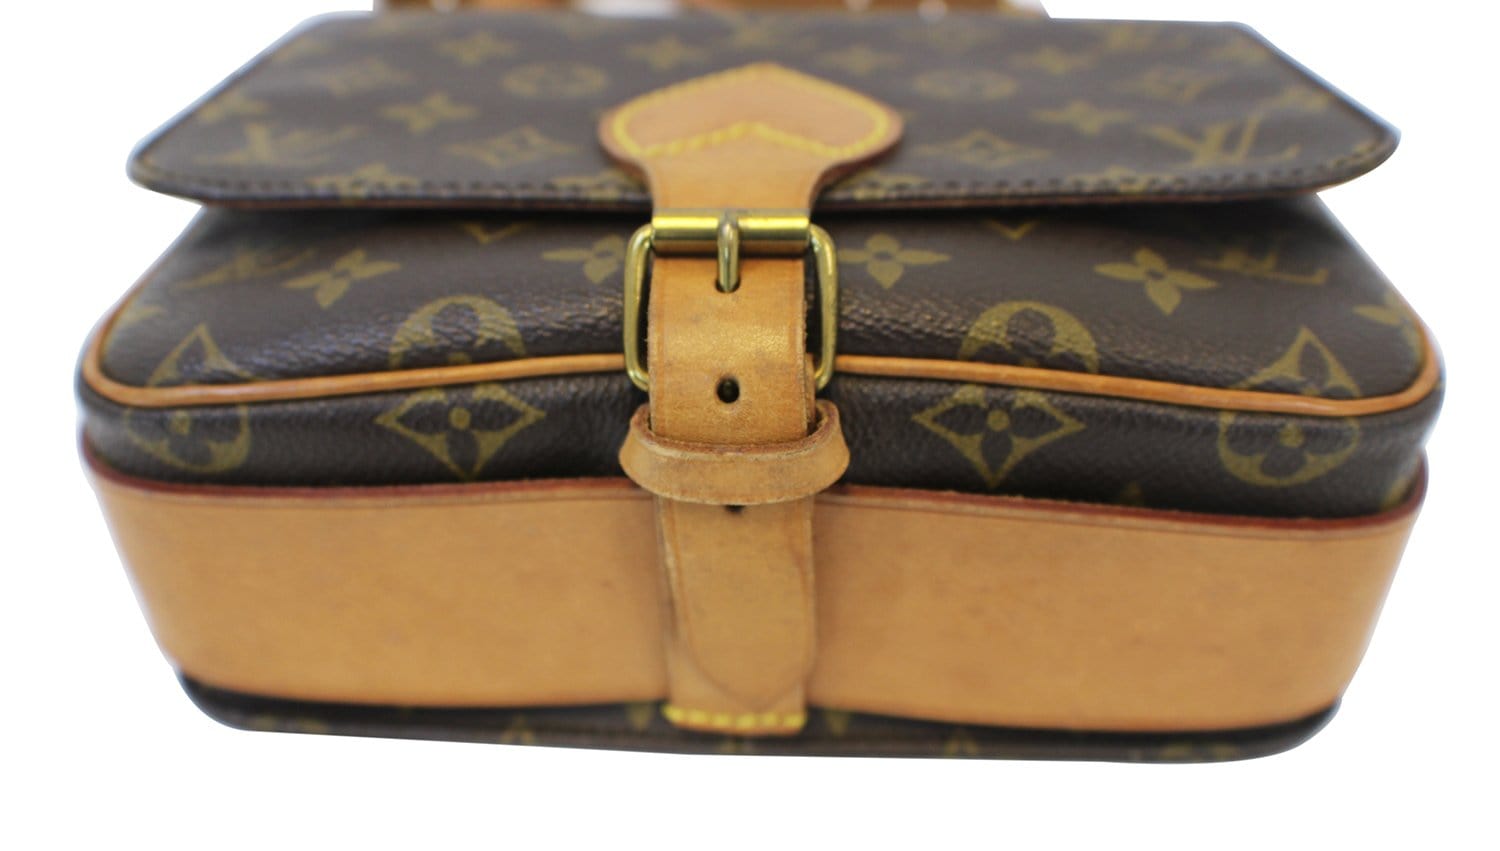 Brown Louis Vuitton Monogram Cartouchiere MM Crossbody Bag, AmaflightschoolShops Revival